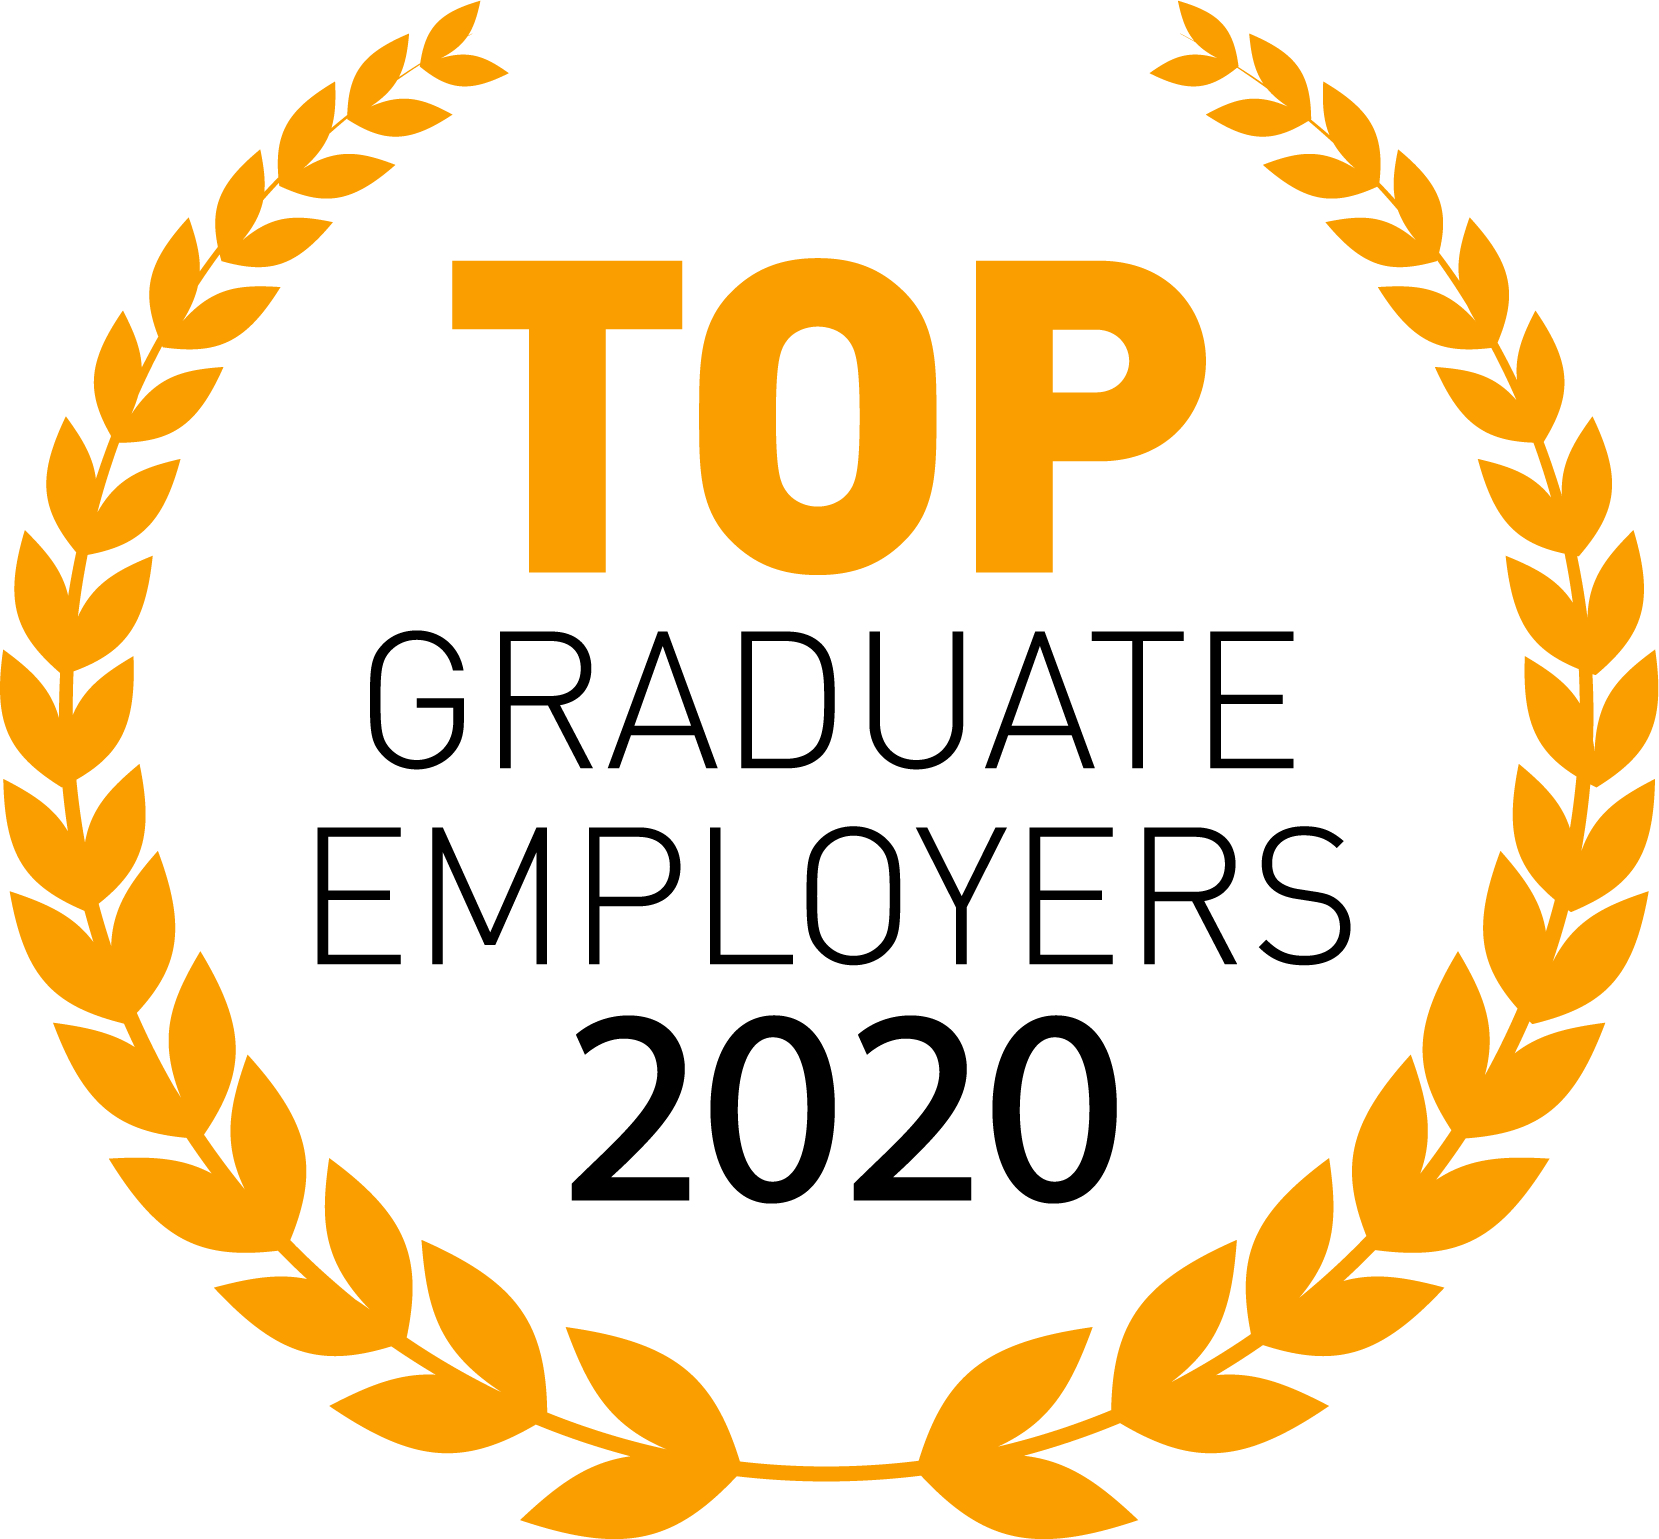 Top Employer 2020